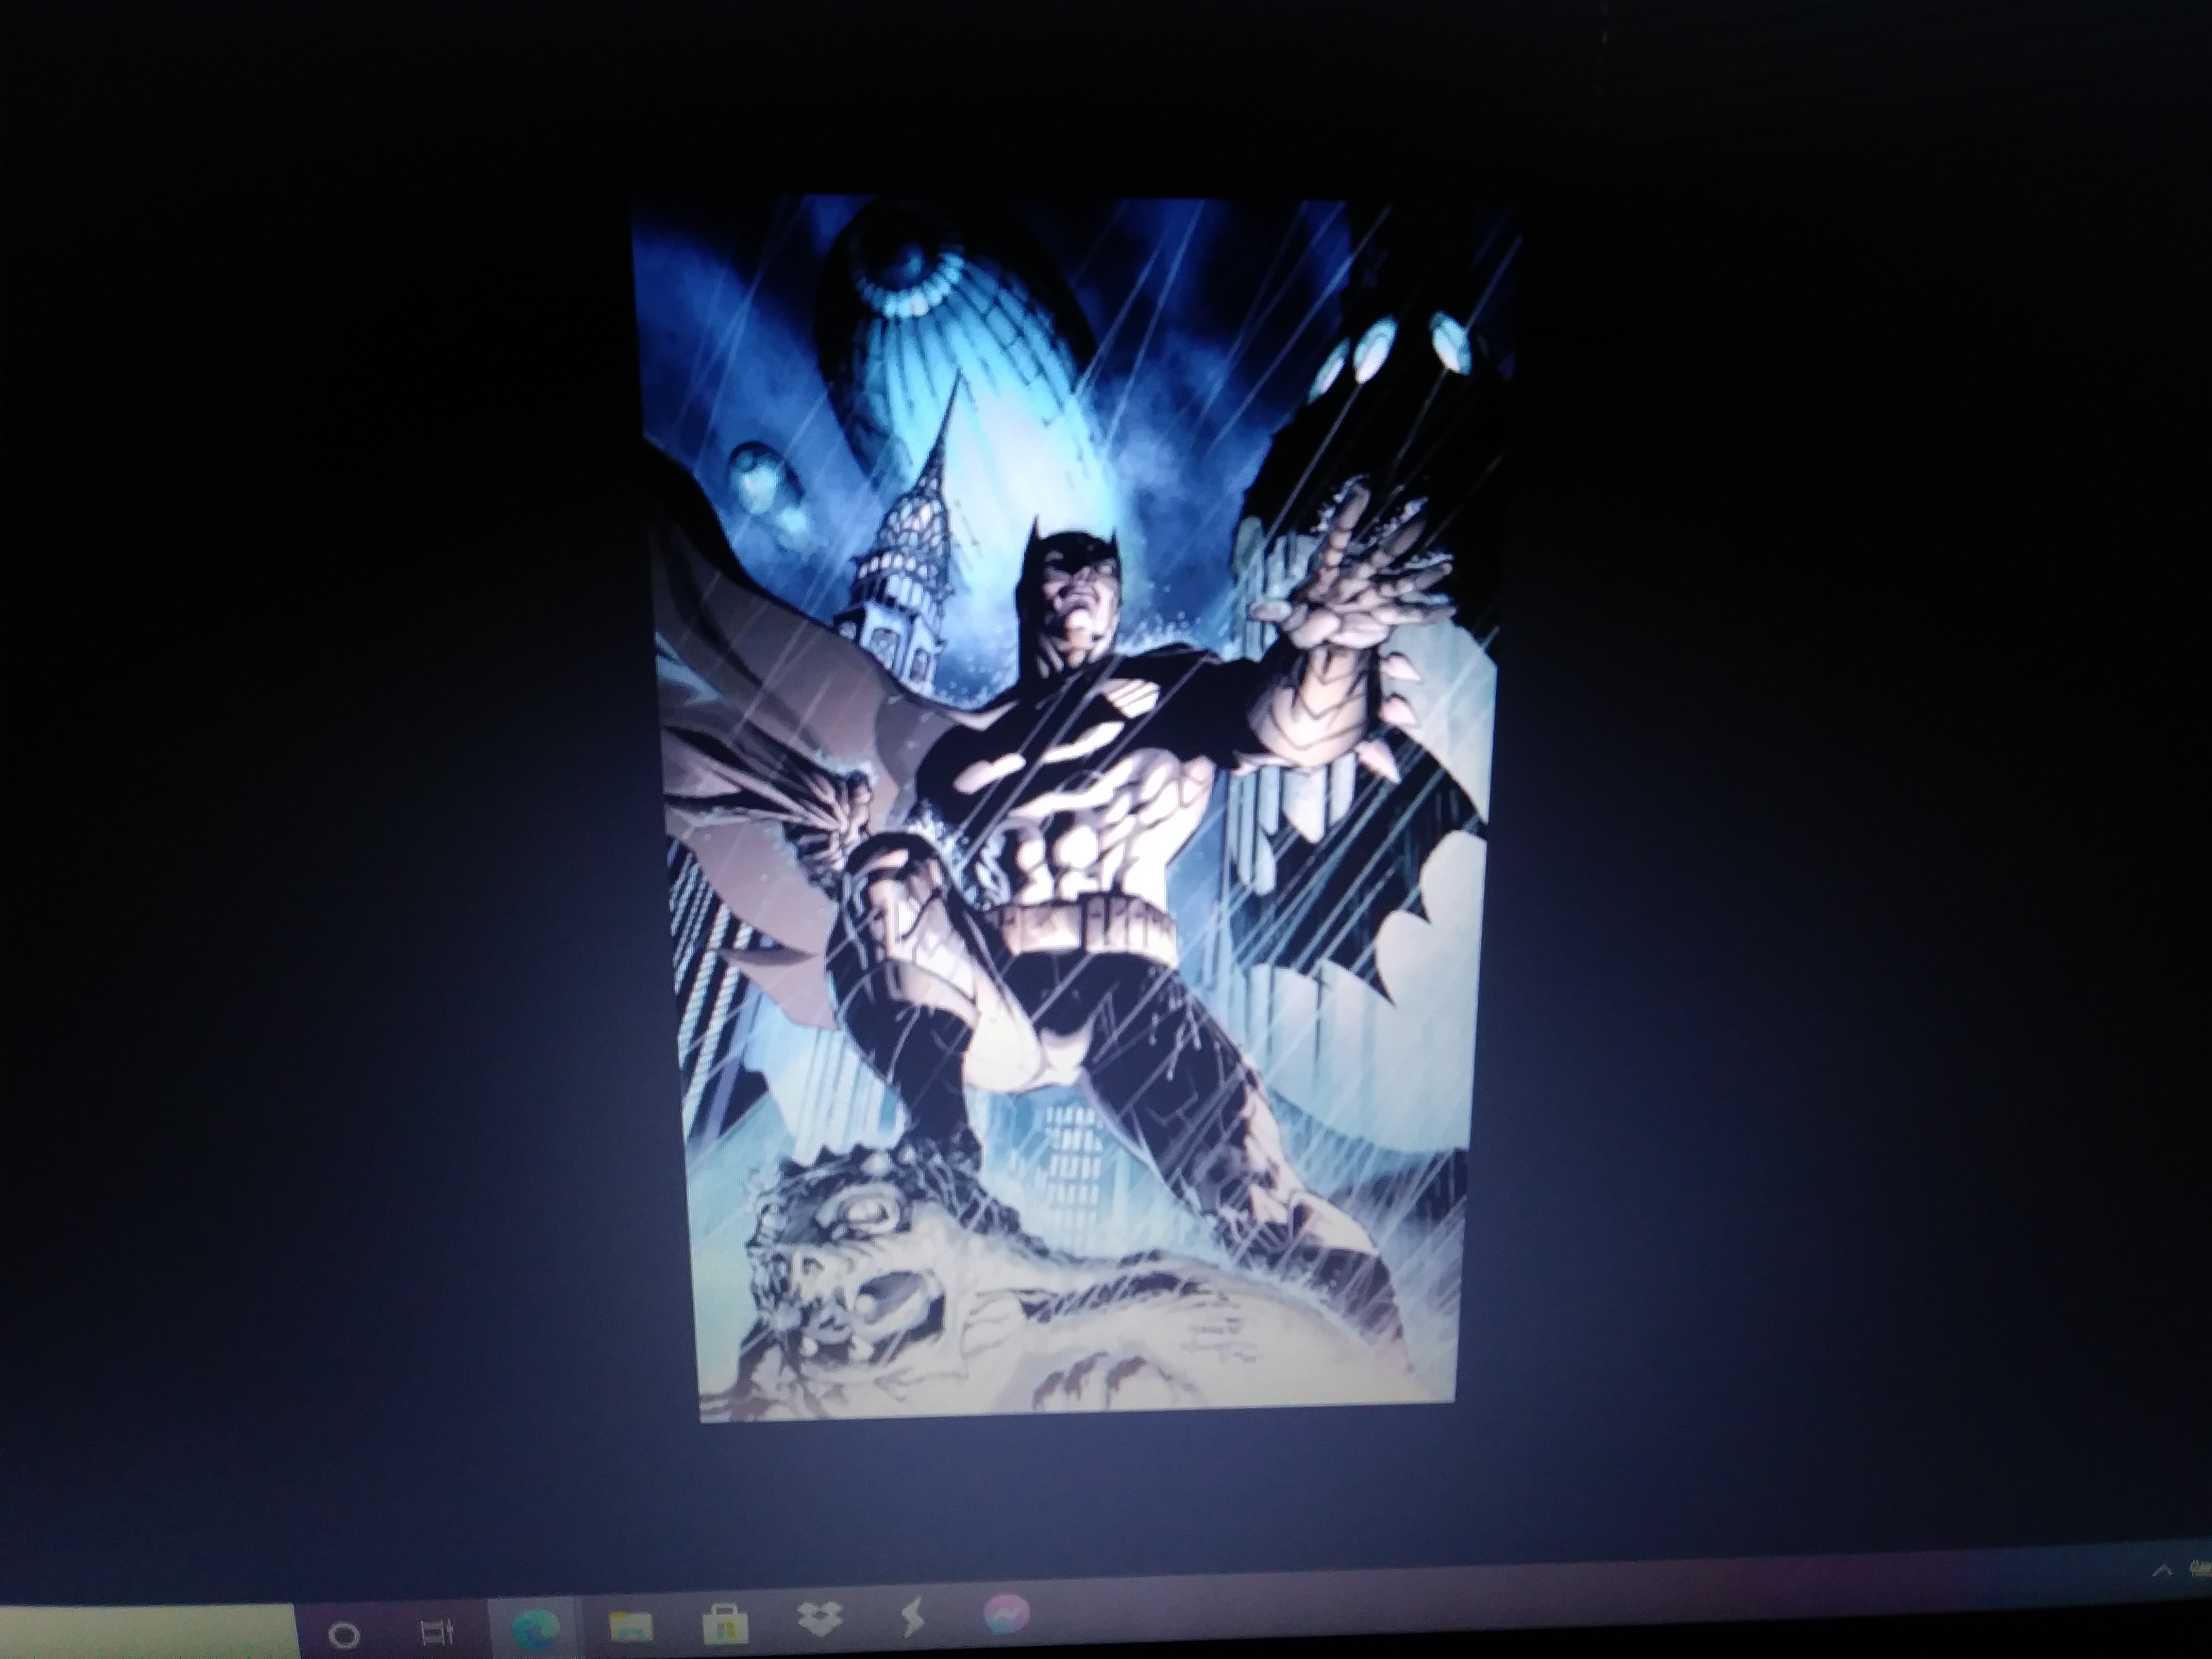 DC Comics: Batman (Prime Earth) by Supermike92 on DeviantArt